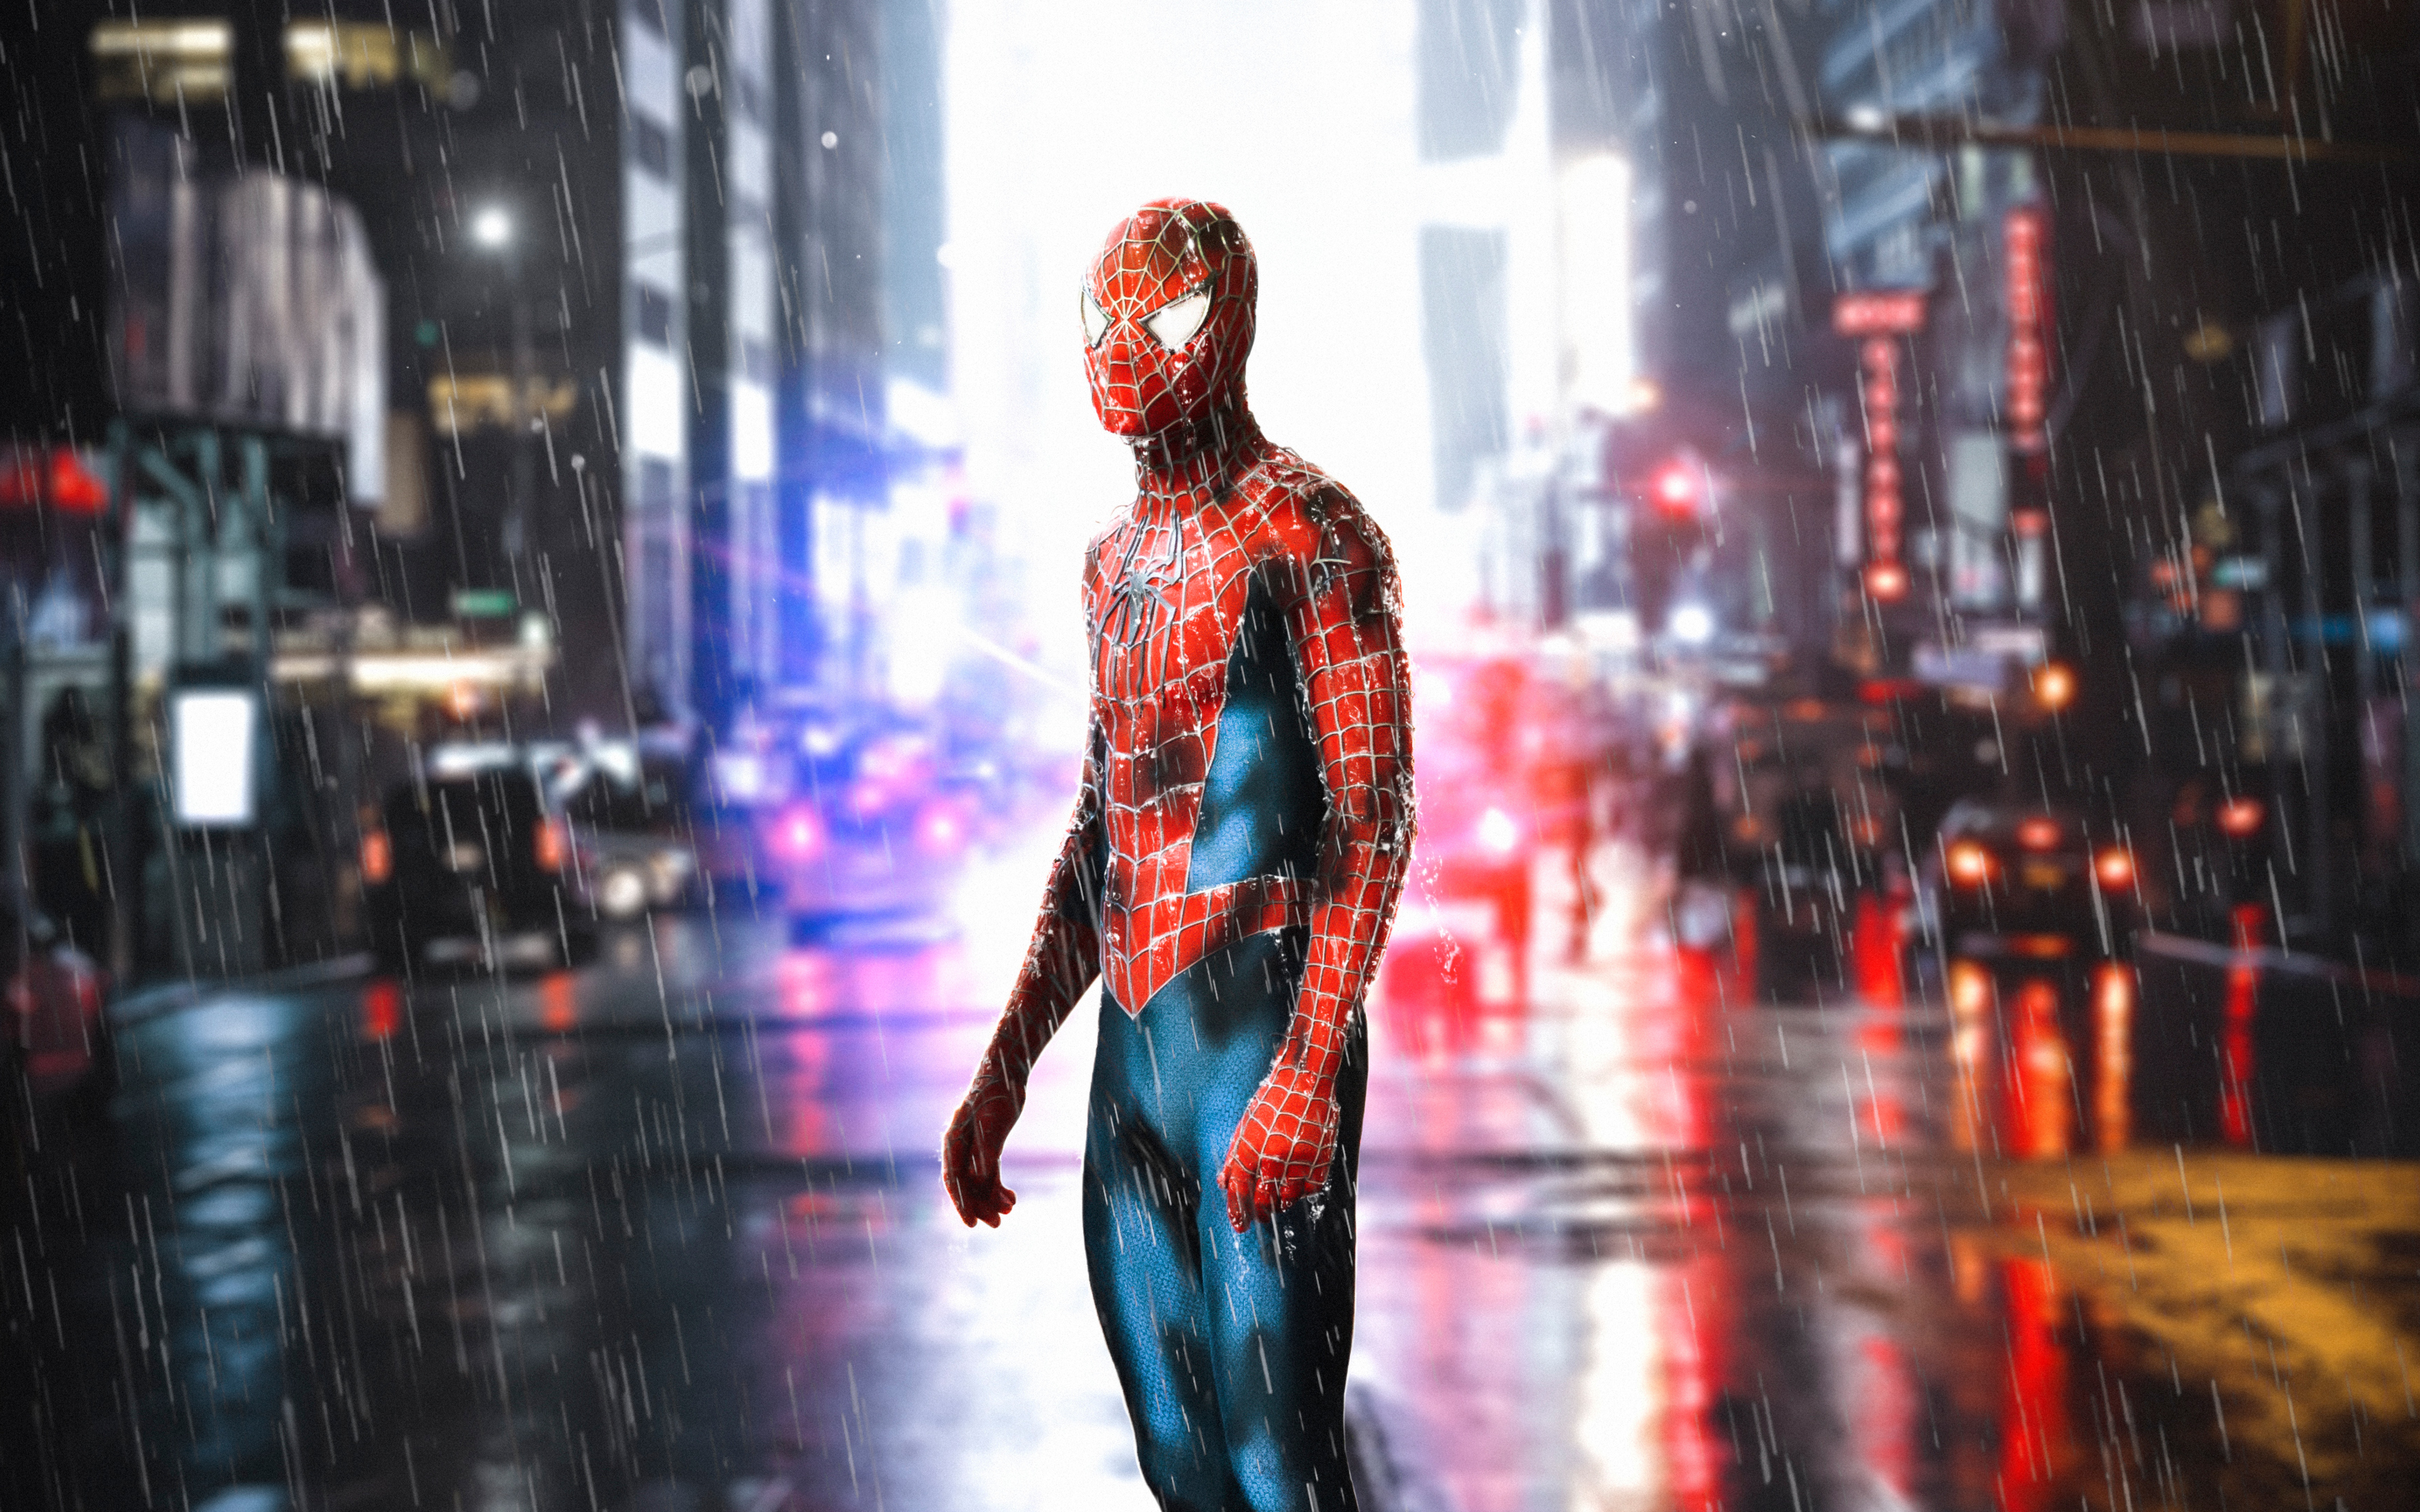 Spiderman Standing In Rain In 3840x2400 Resolution. spiderman-standing-in-r...